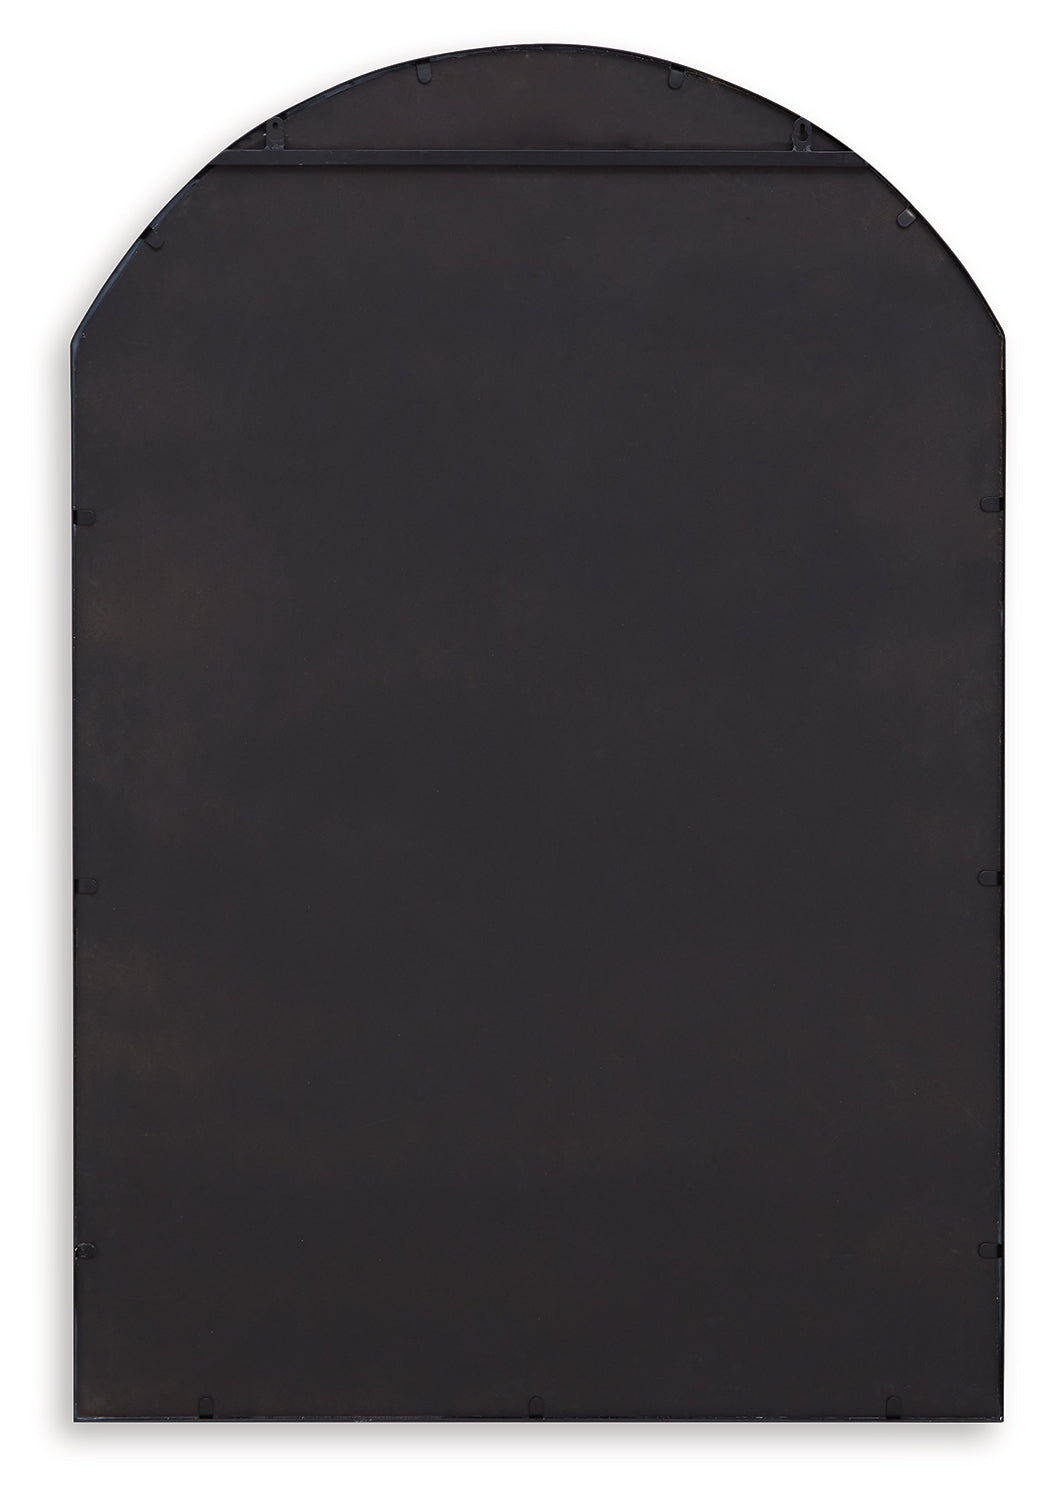 Evengton Black Accent Mirror - A8010319 - Bien Home Furniture &amp; Electronics